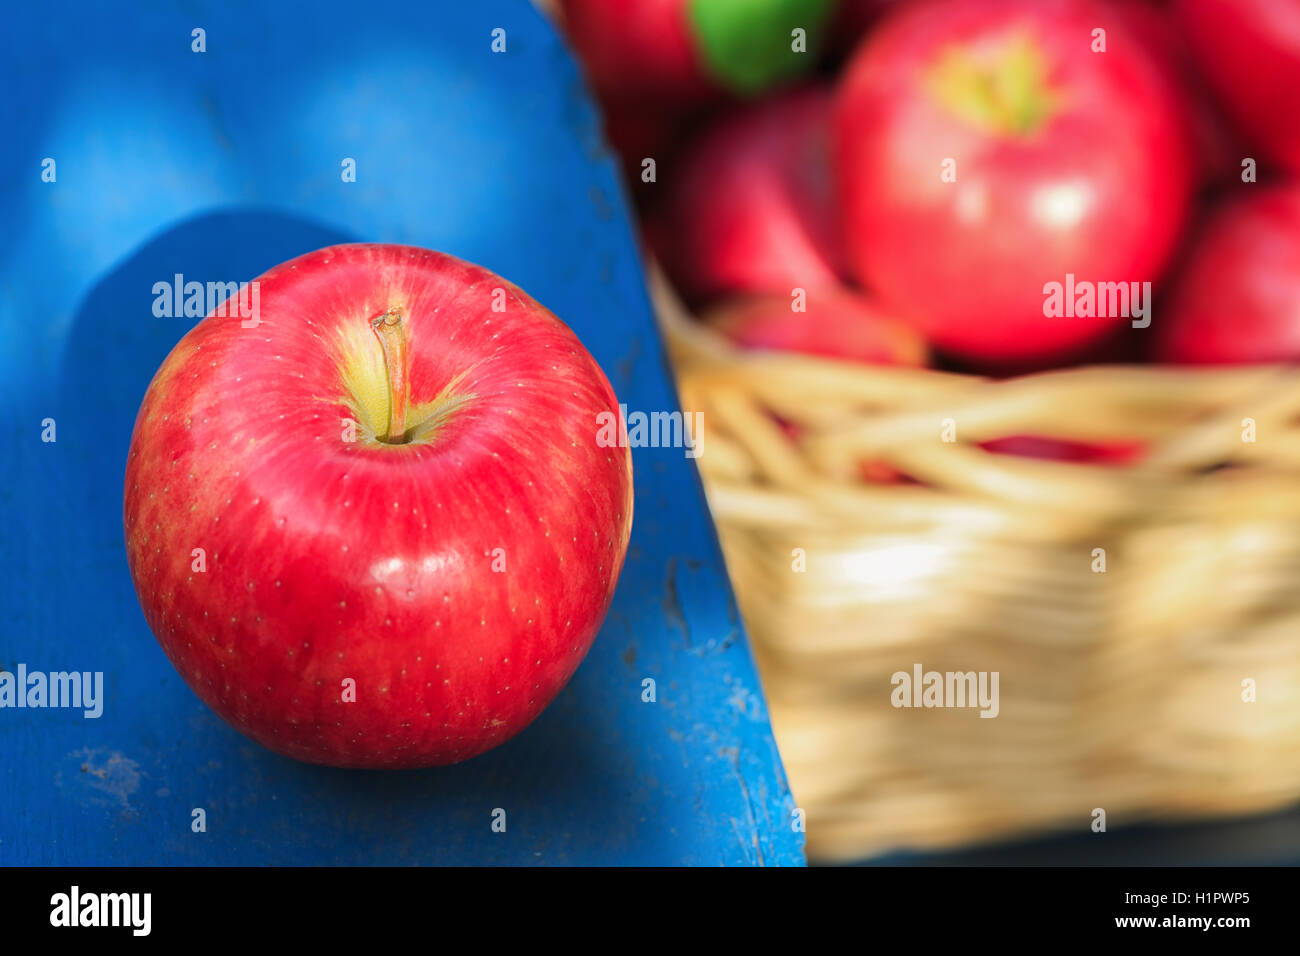 https://c8.alamy.com/comp/H1PWP5/a-basket-of-freshly-picked-honey-crisp-apples-sitting-on-an-outdoor-H1PWP5.jpg